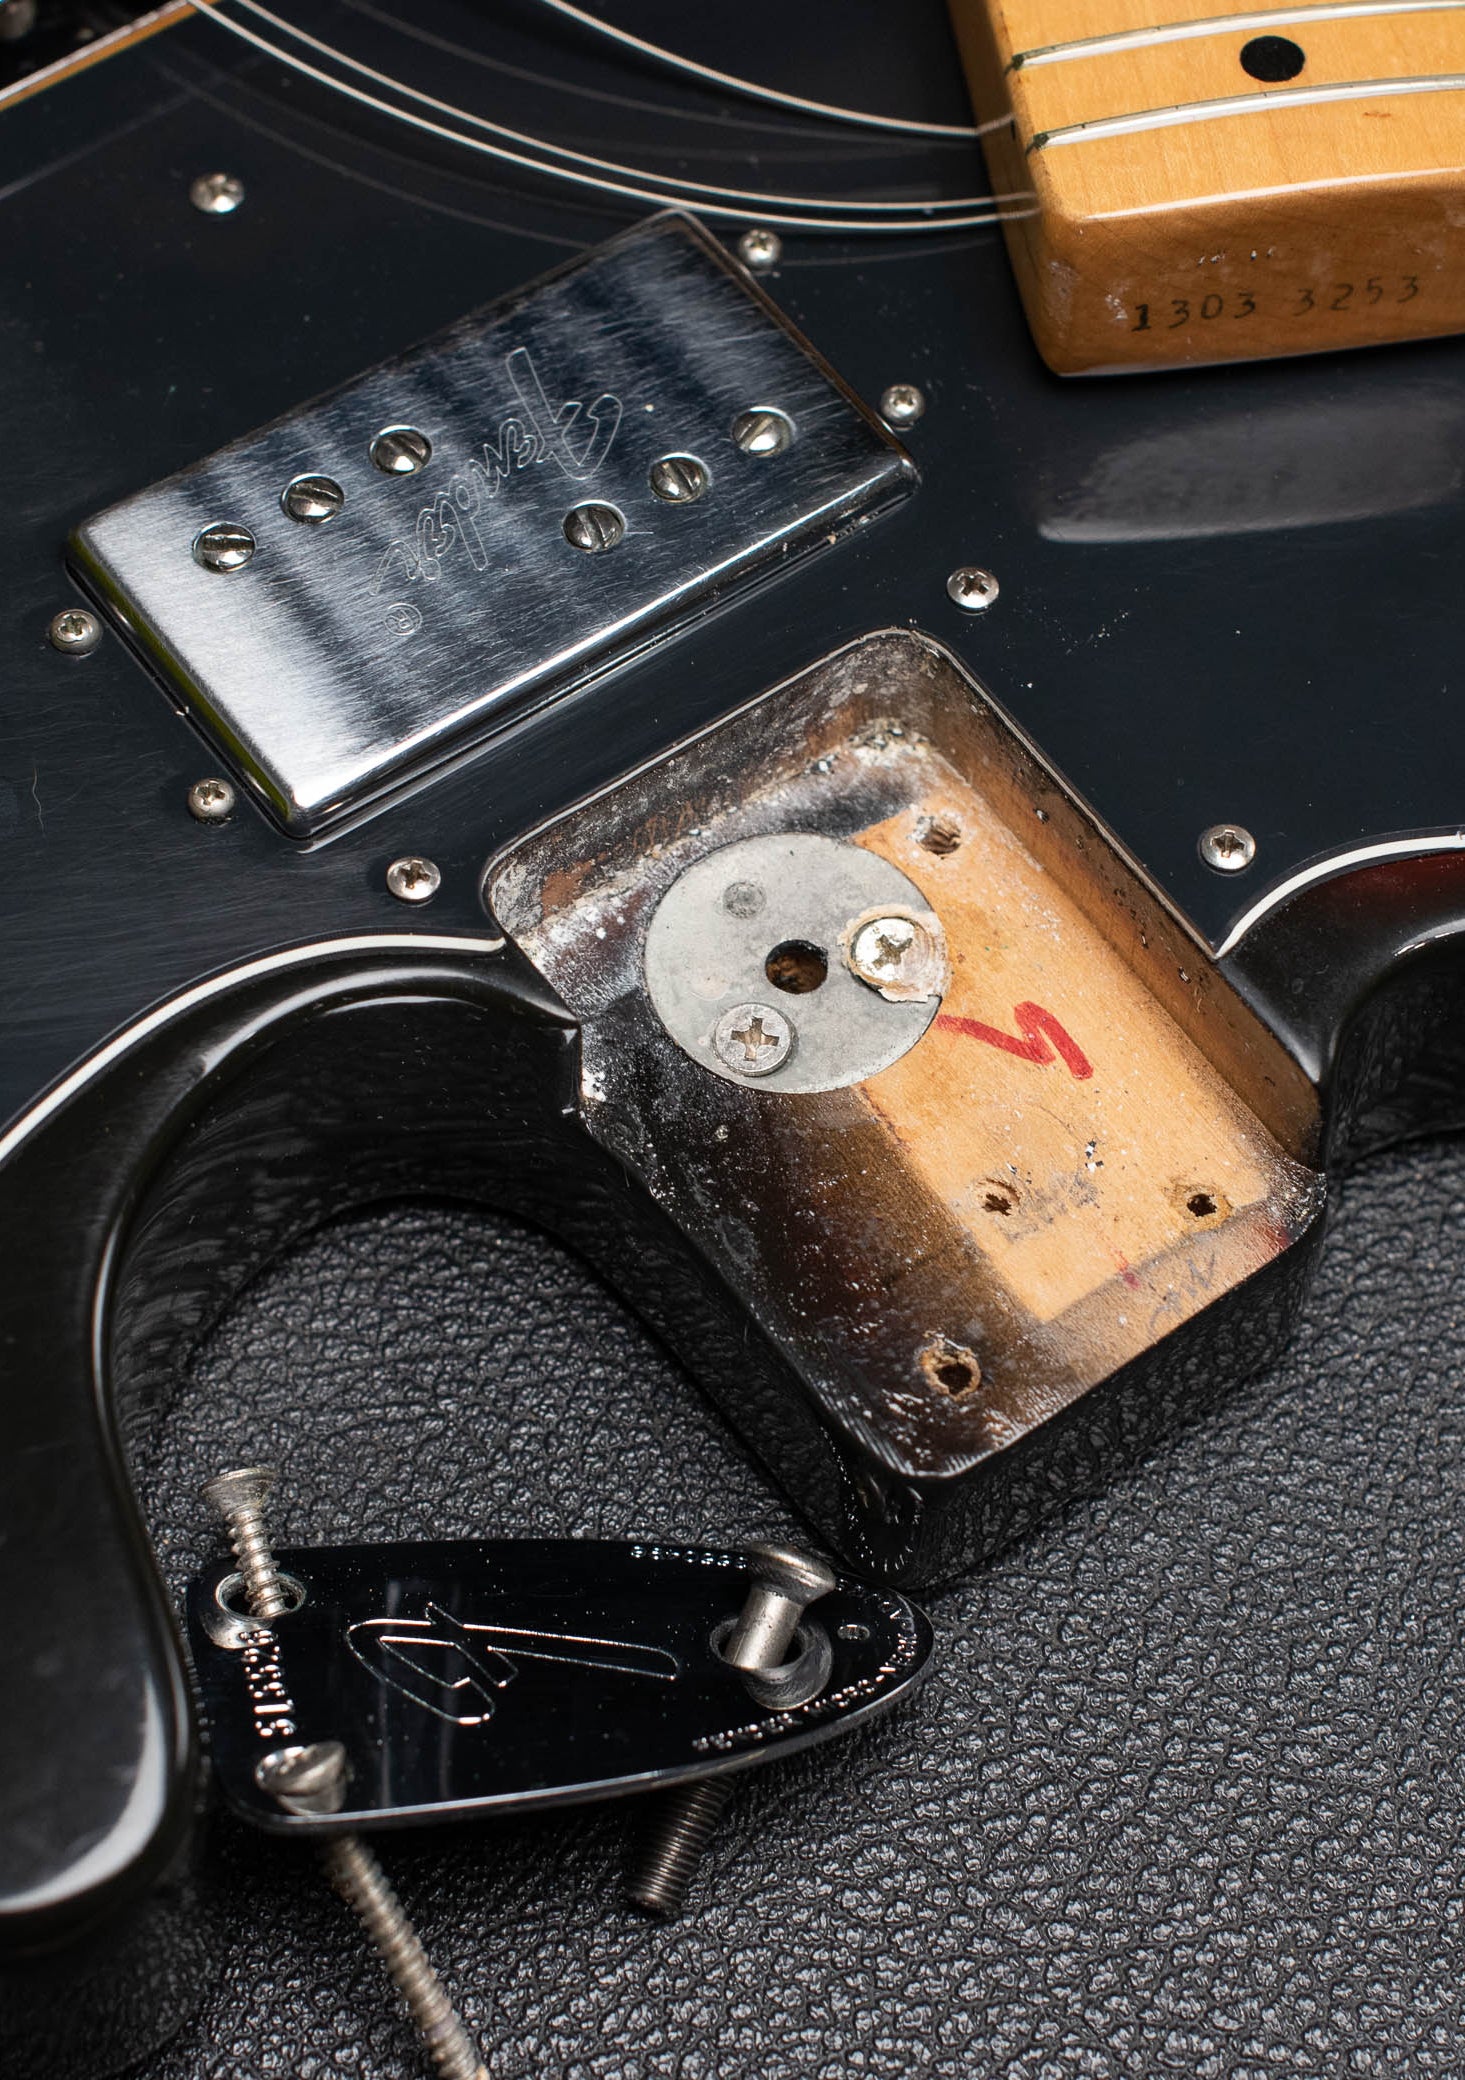 1973 Fender Telecaster neck pocket, three bolt, micro tilt